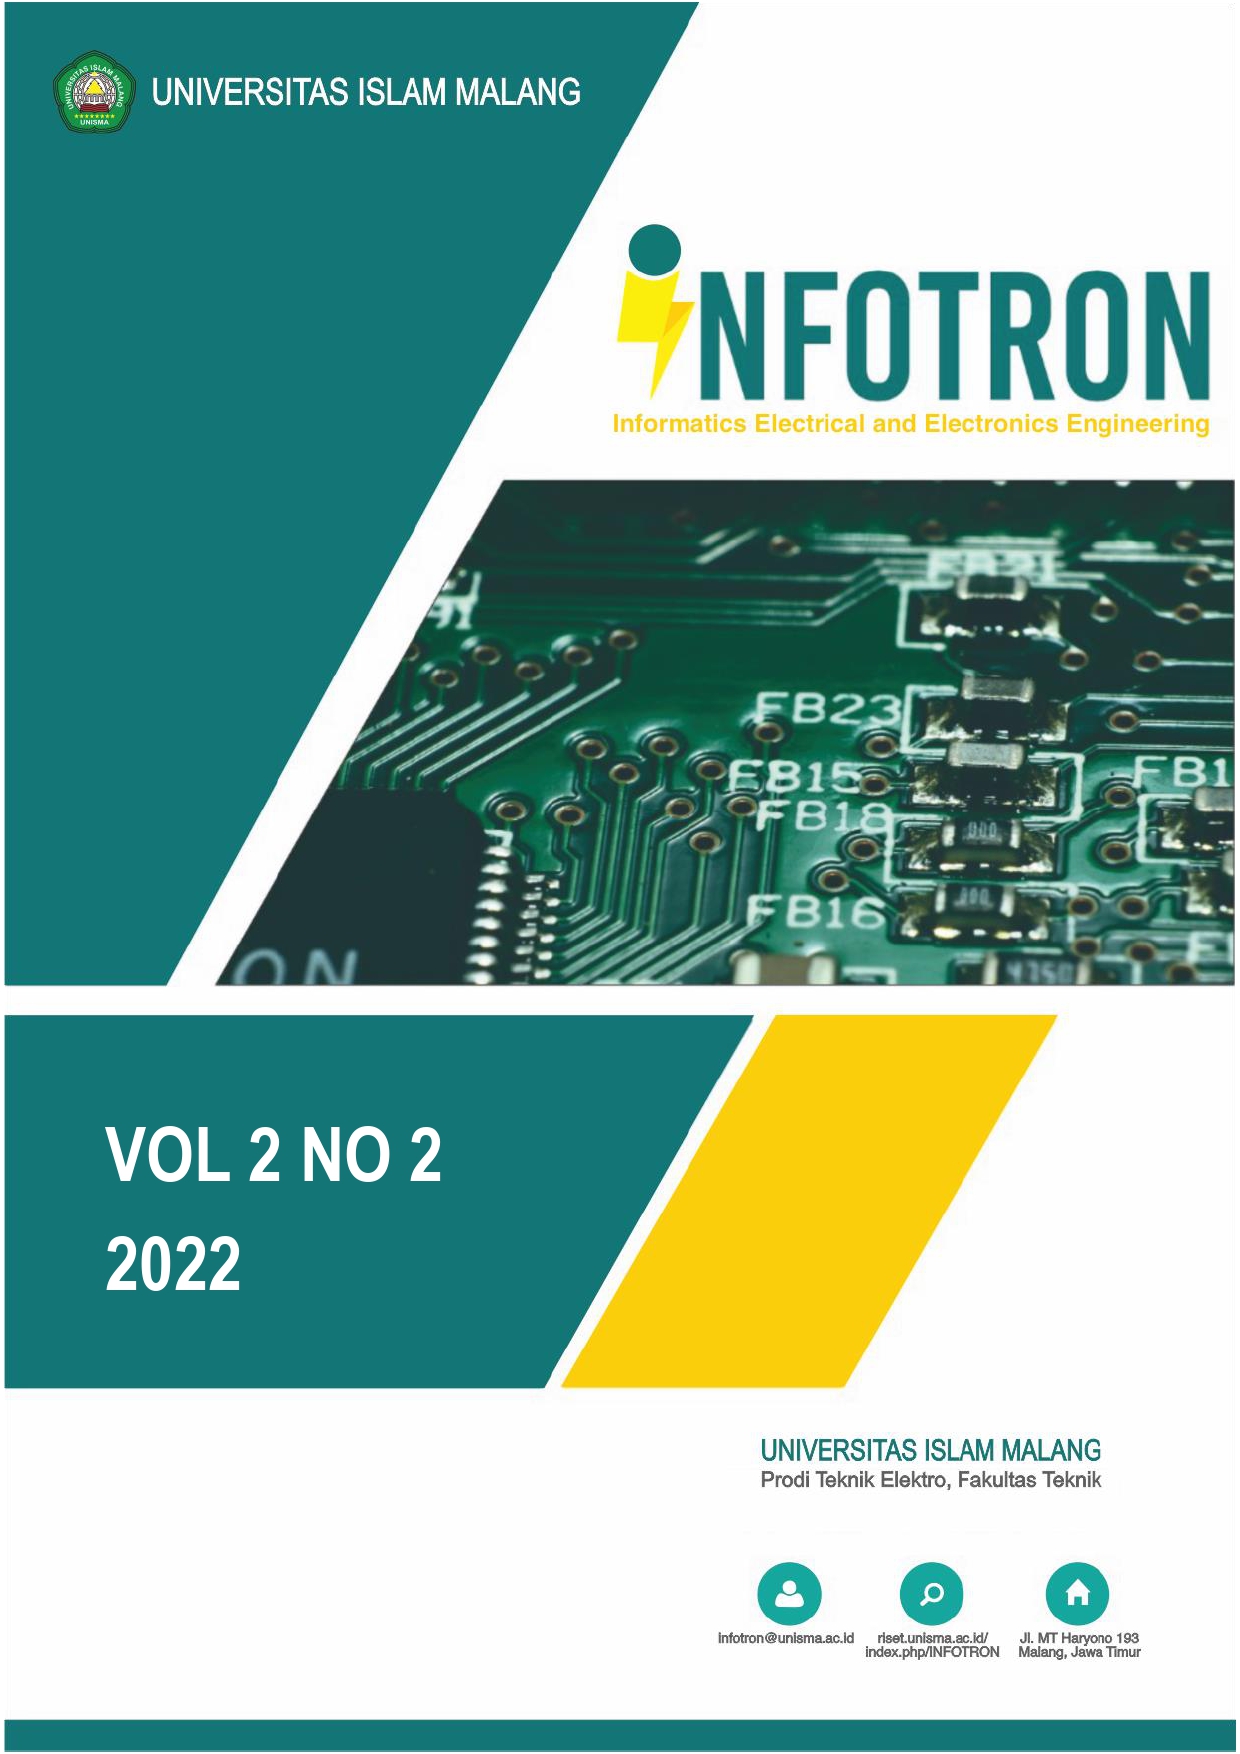 					View Vol. 2 No. 2 (2022): Infotron
				